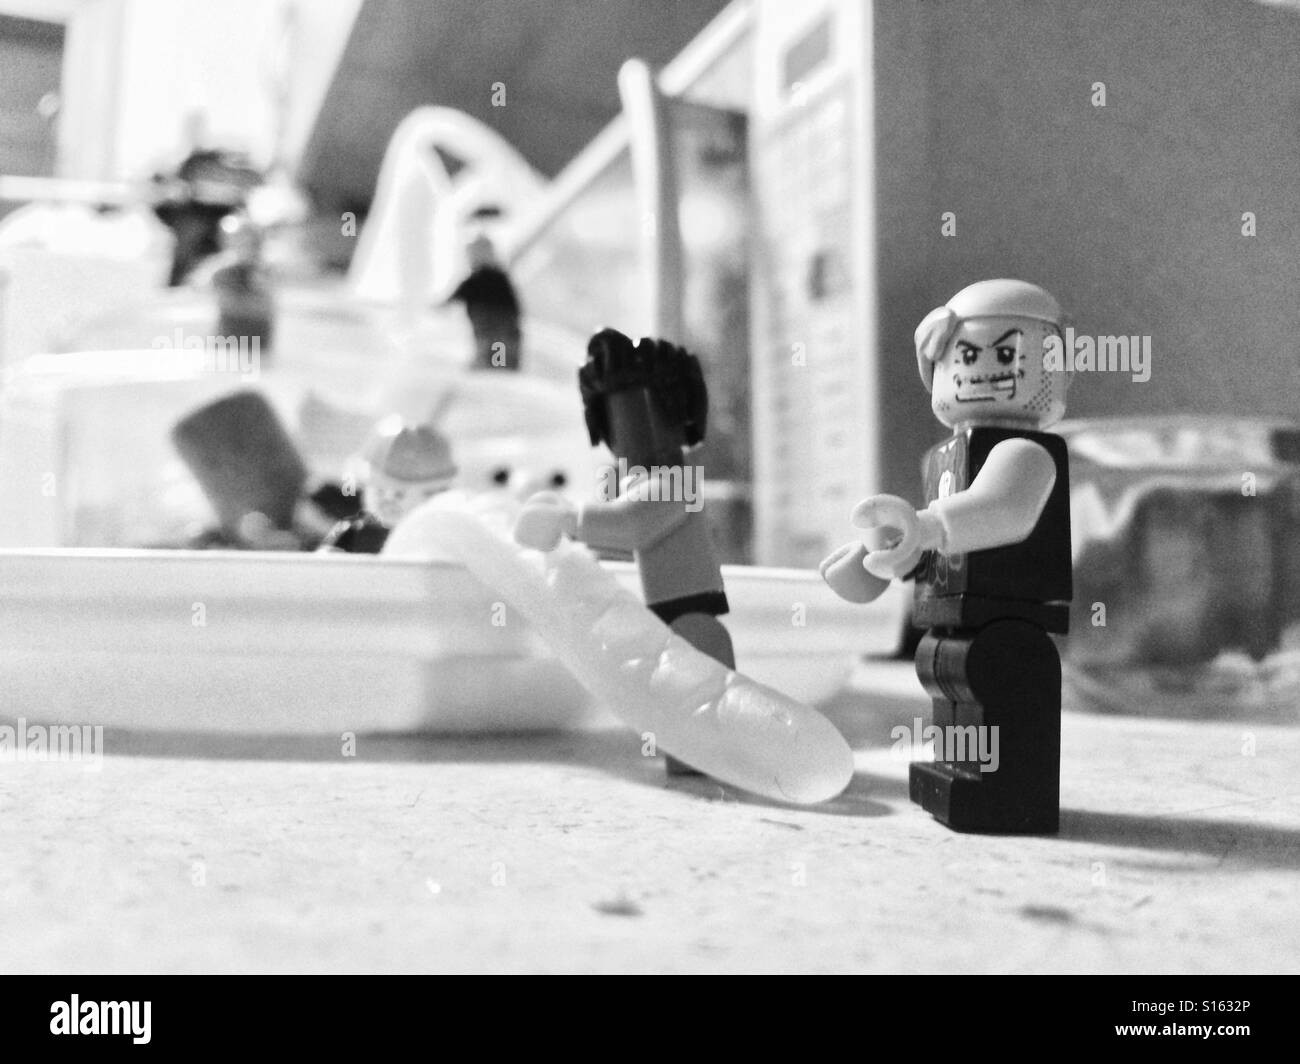 La Lego story - Il dopo Halloween dolce furto (2) Foto Stock